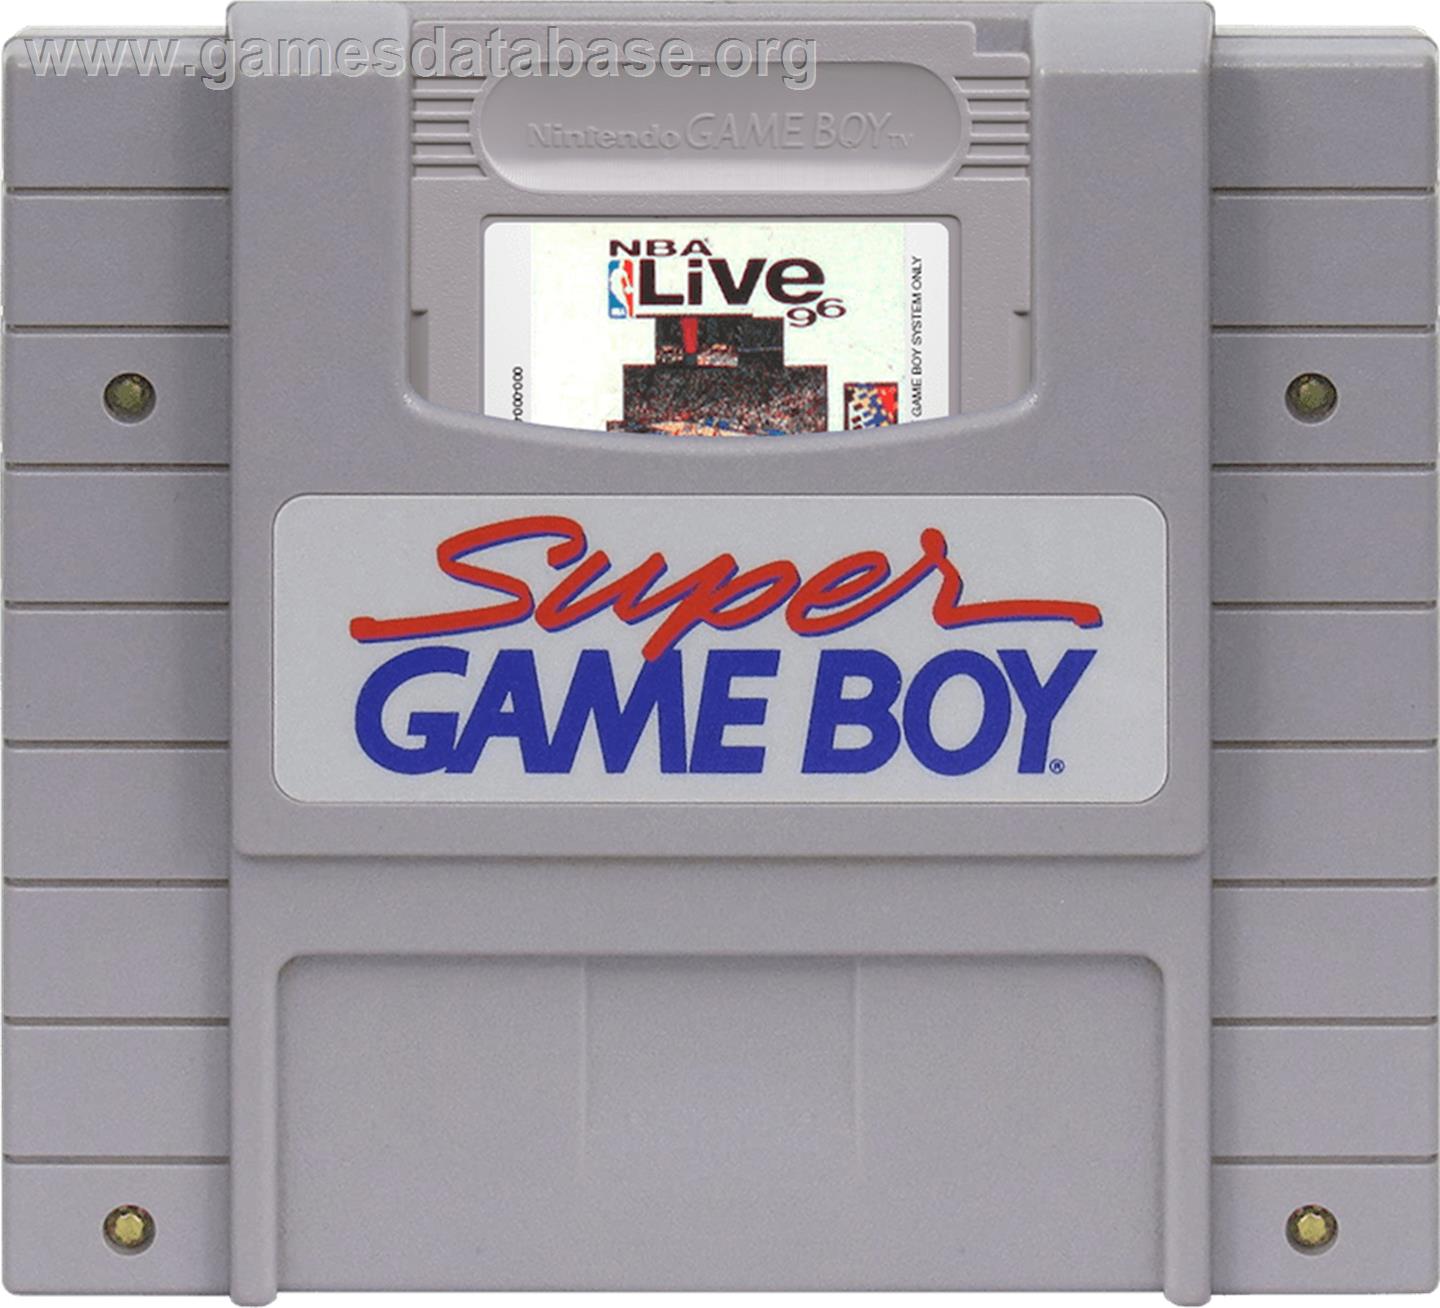 NBA Live 96 - Nintendo Super Gameboy - Artwork - Cartridge